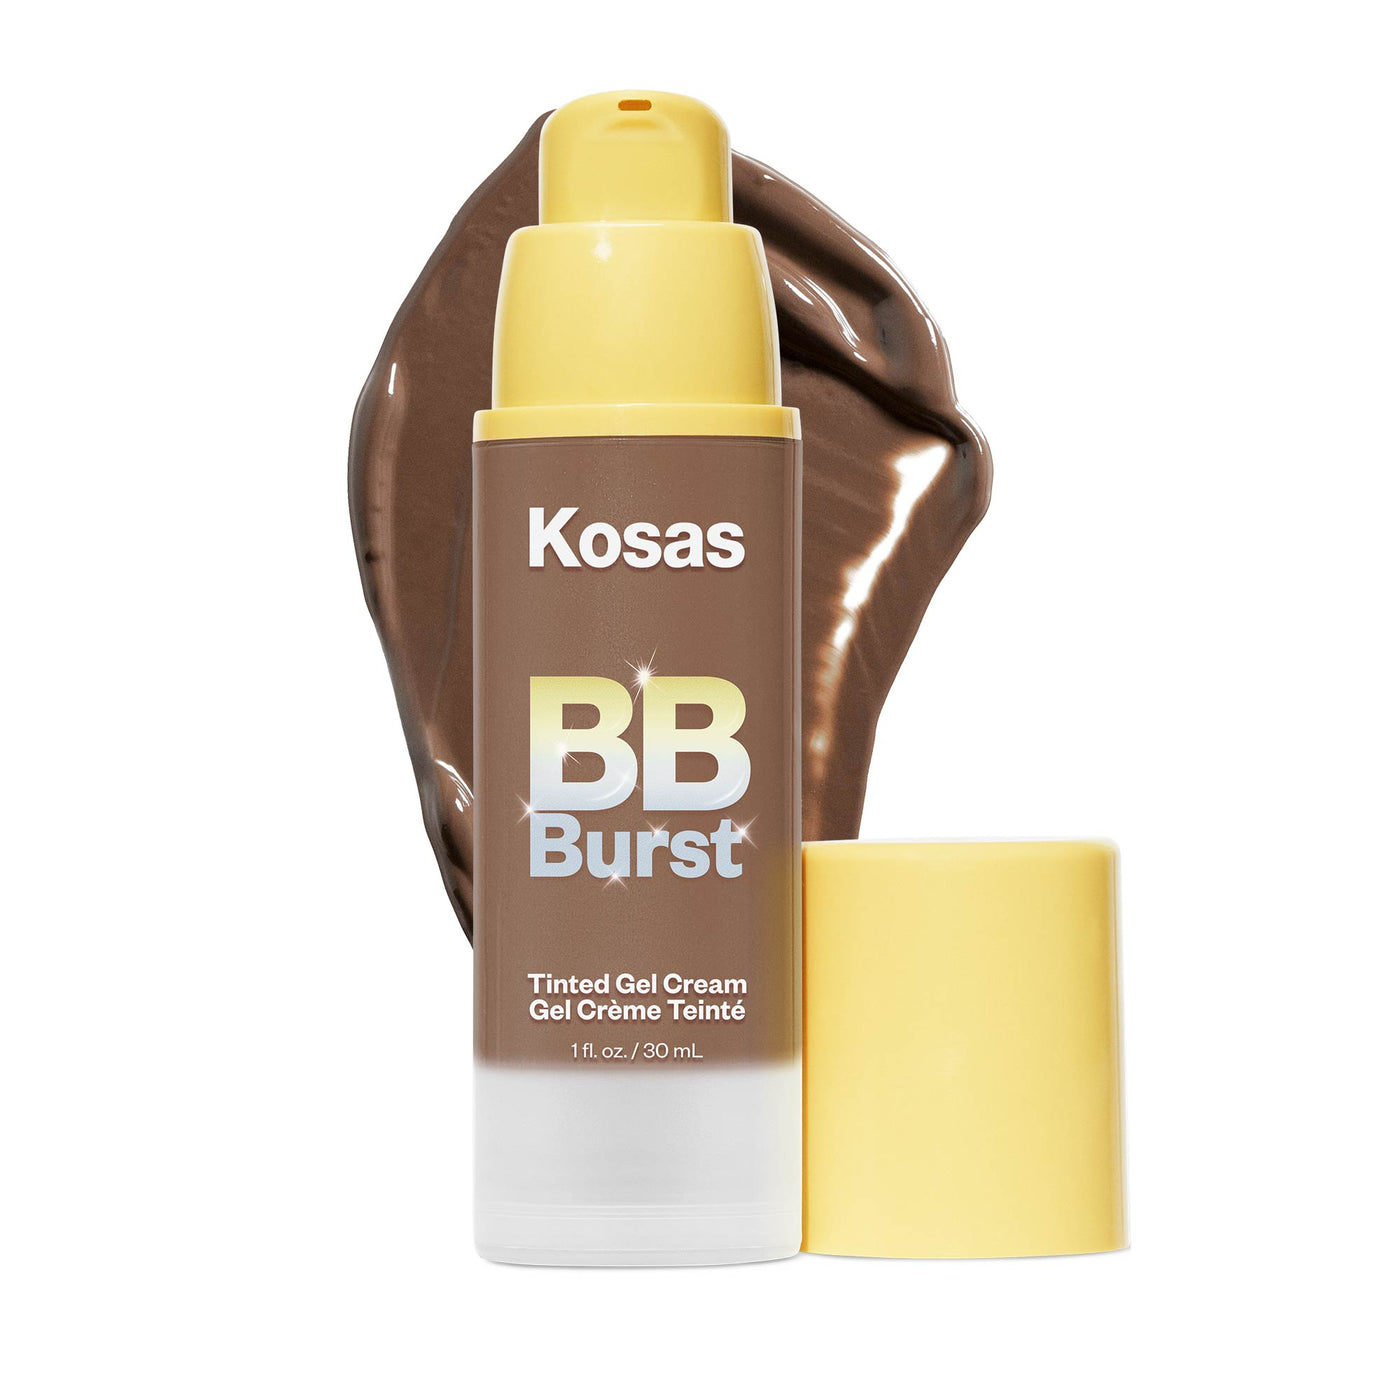 Kosas BB Burst Tinted Gel Cream 41